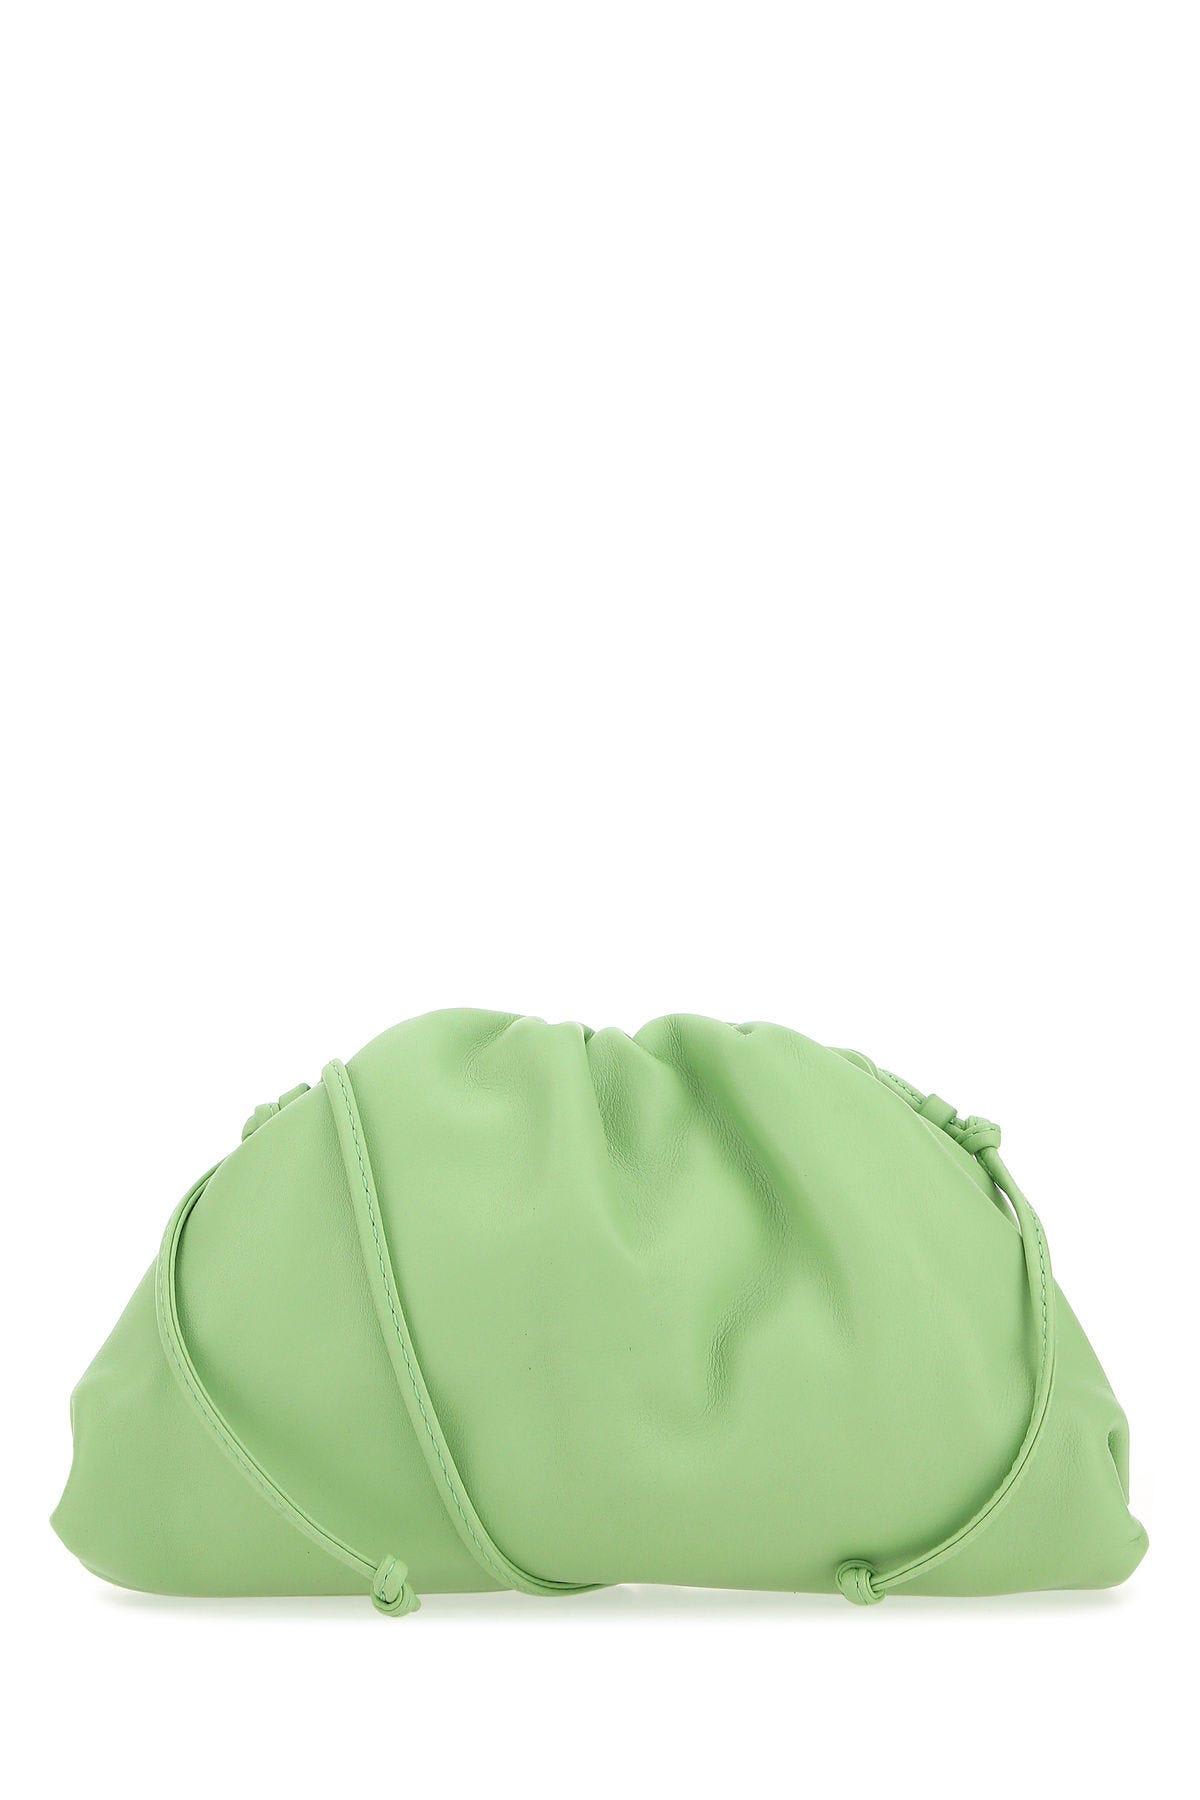 Bottega Veneta Pastel Green Nappa Leather Mini Pouch Clutch